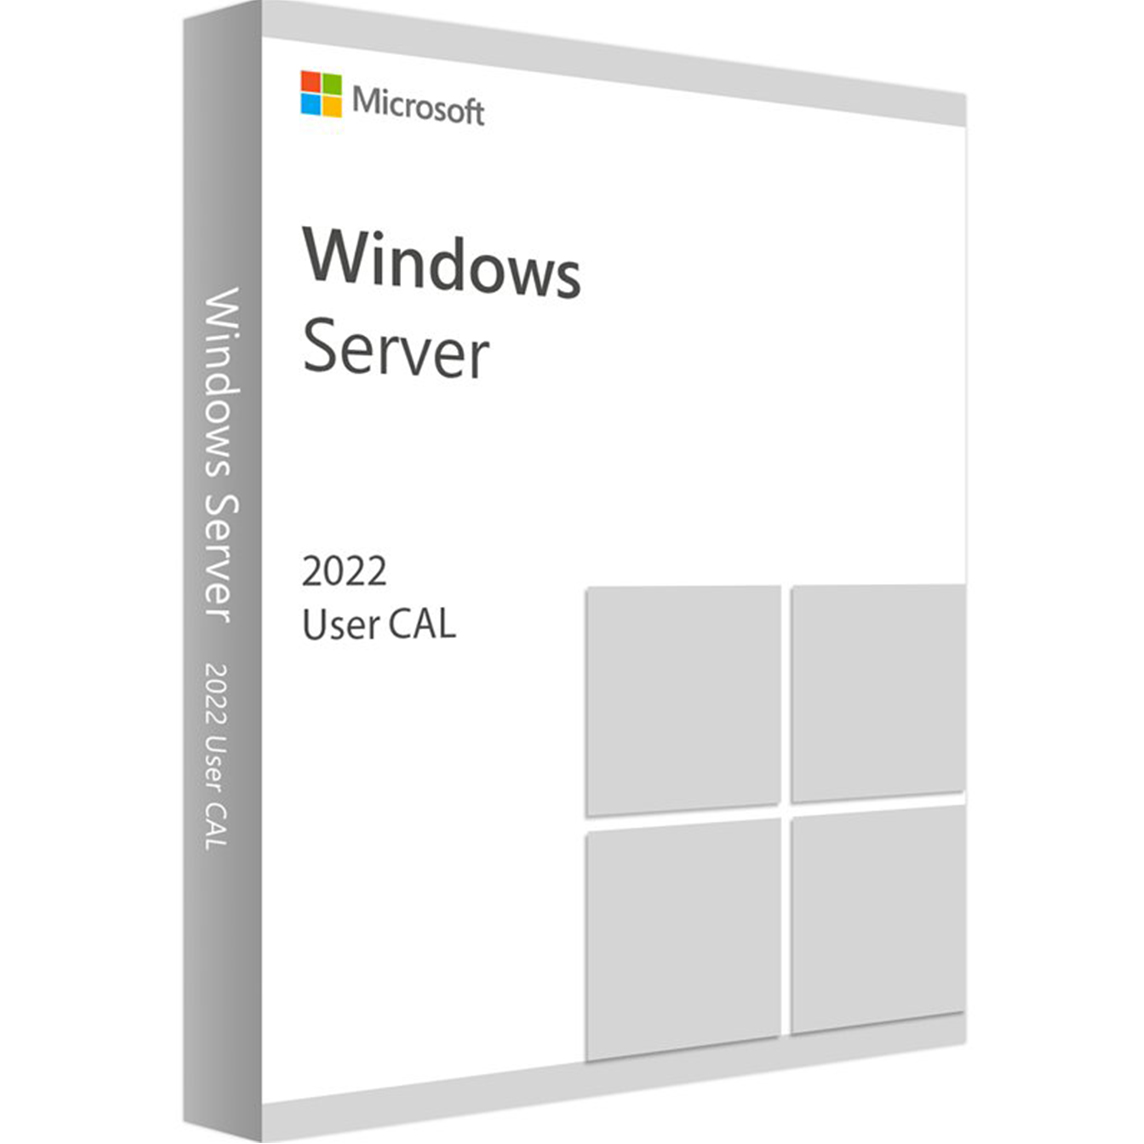 Windows Server 2022 Remote Desktop Services User CAL